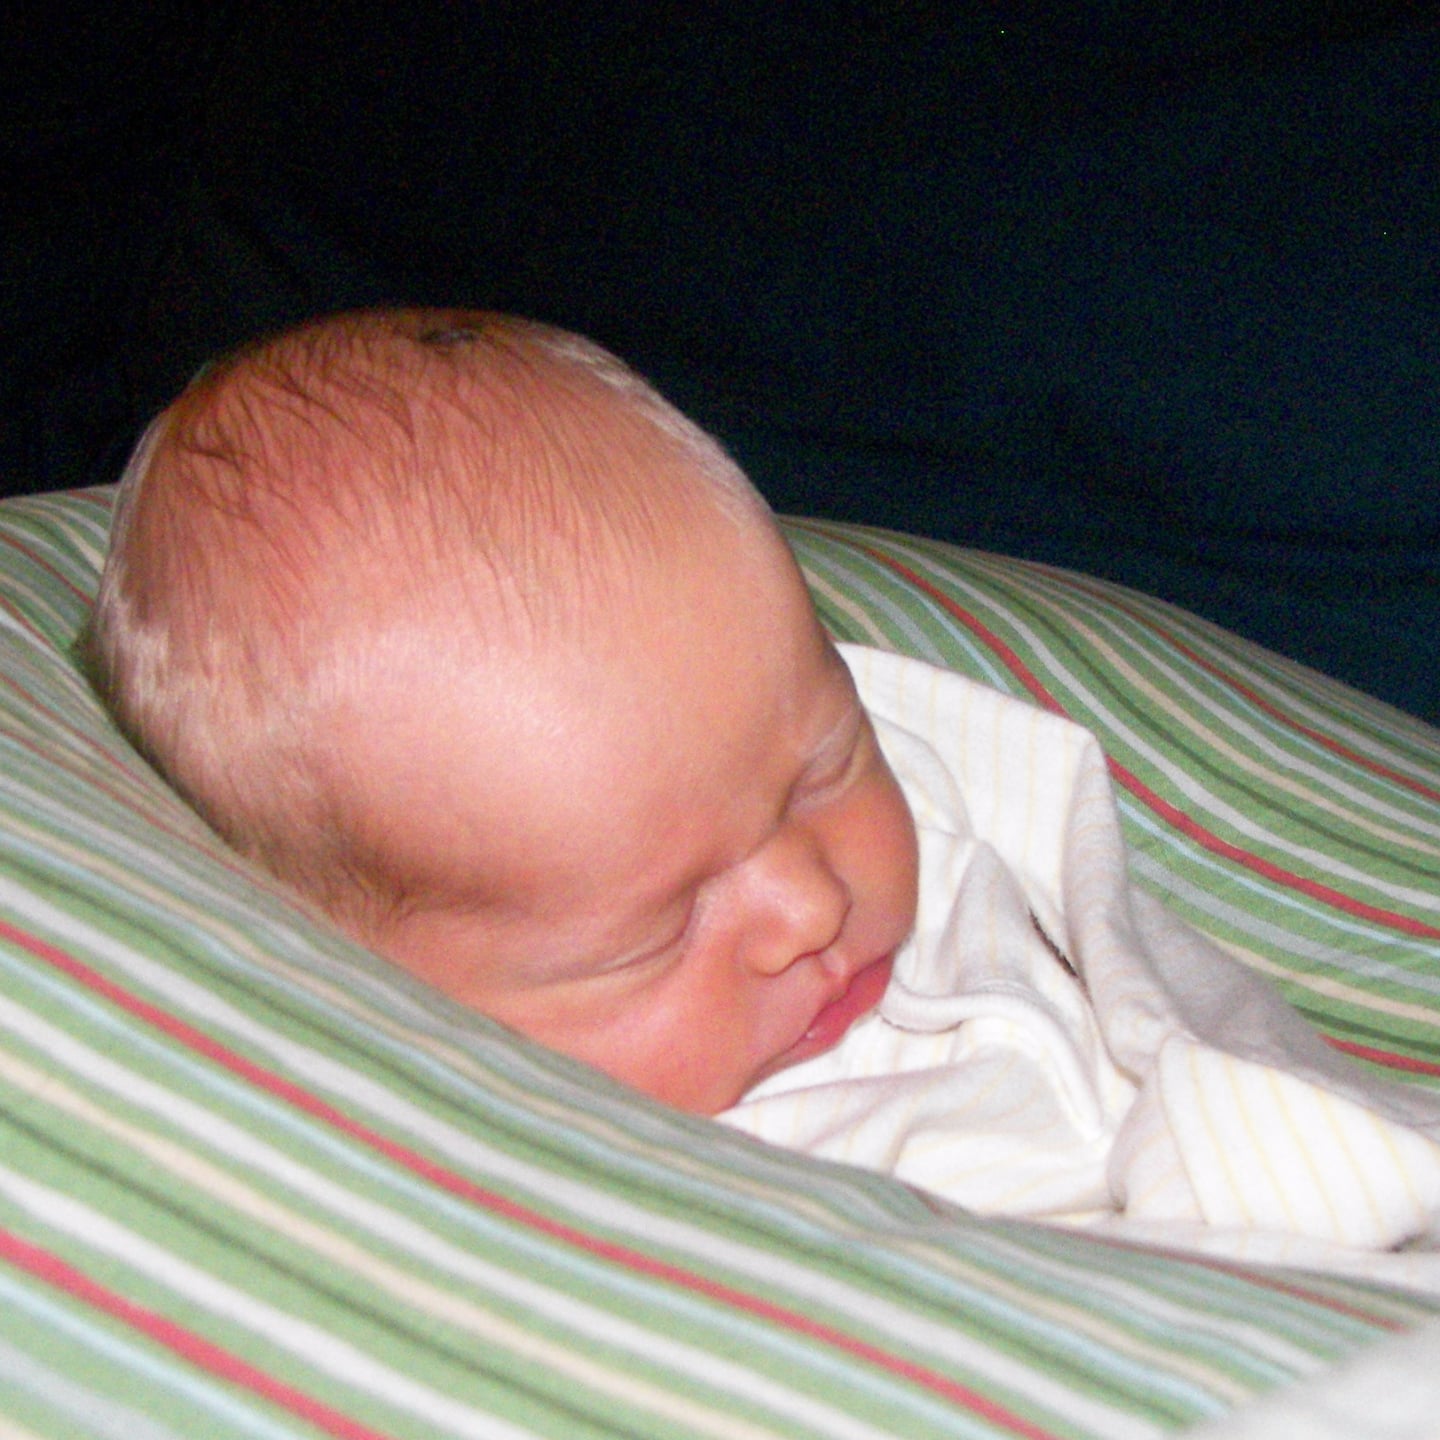 pillow to help baby sleep